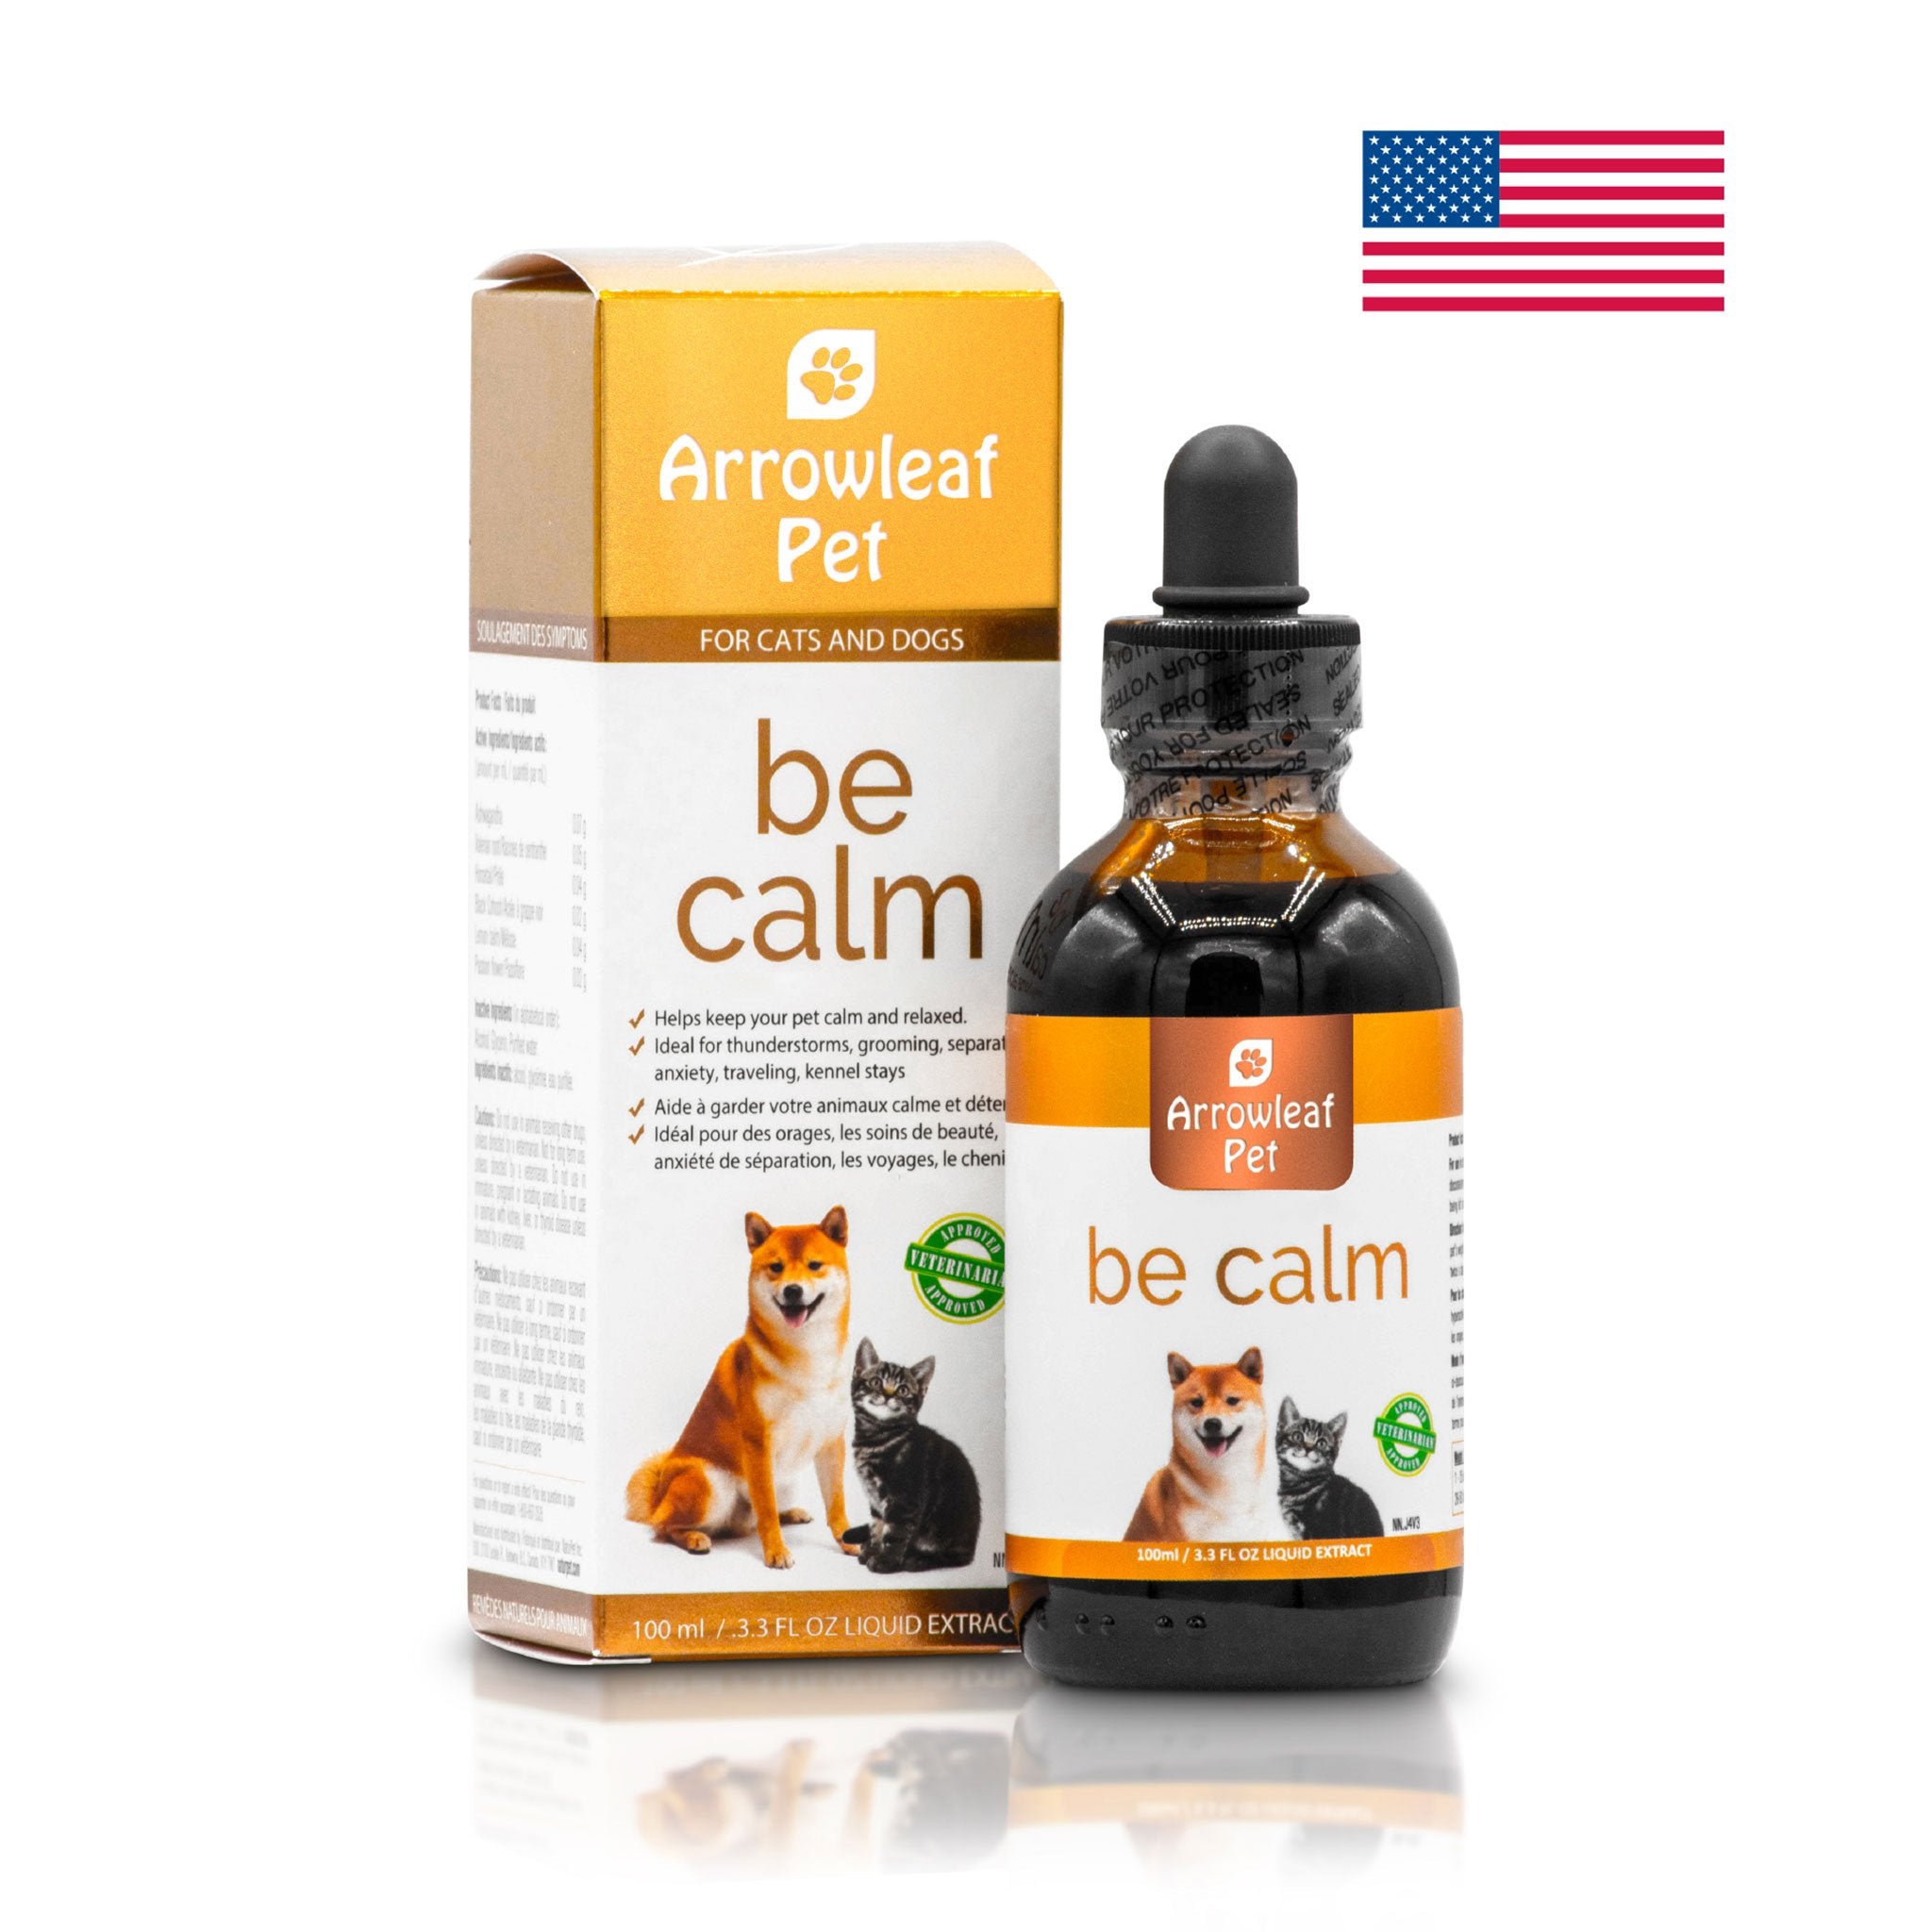 Arrowleaf Pet Be Calm product